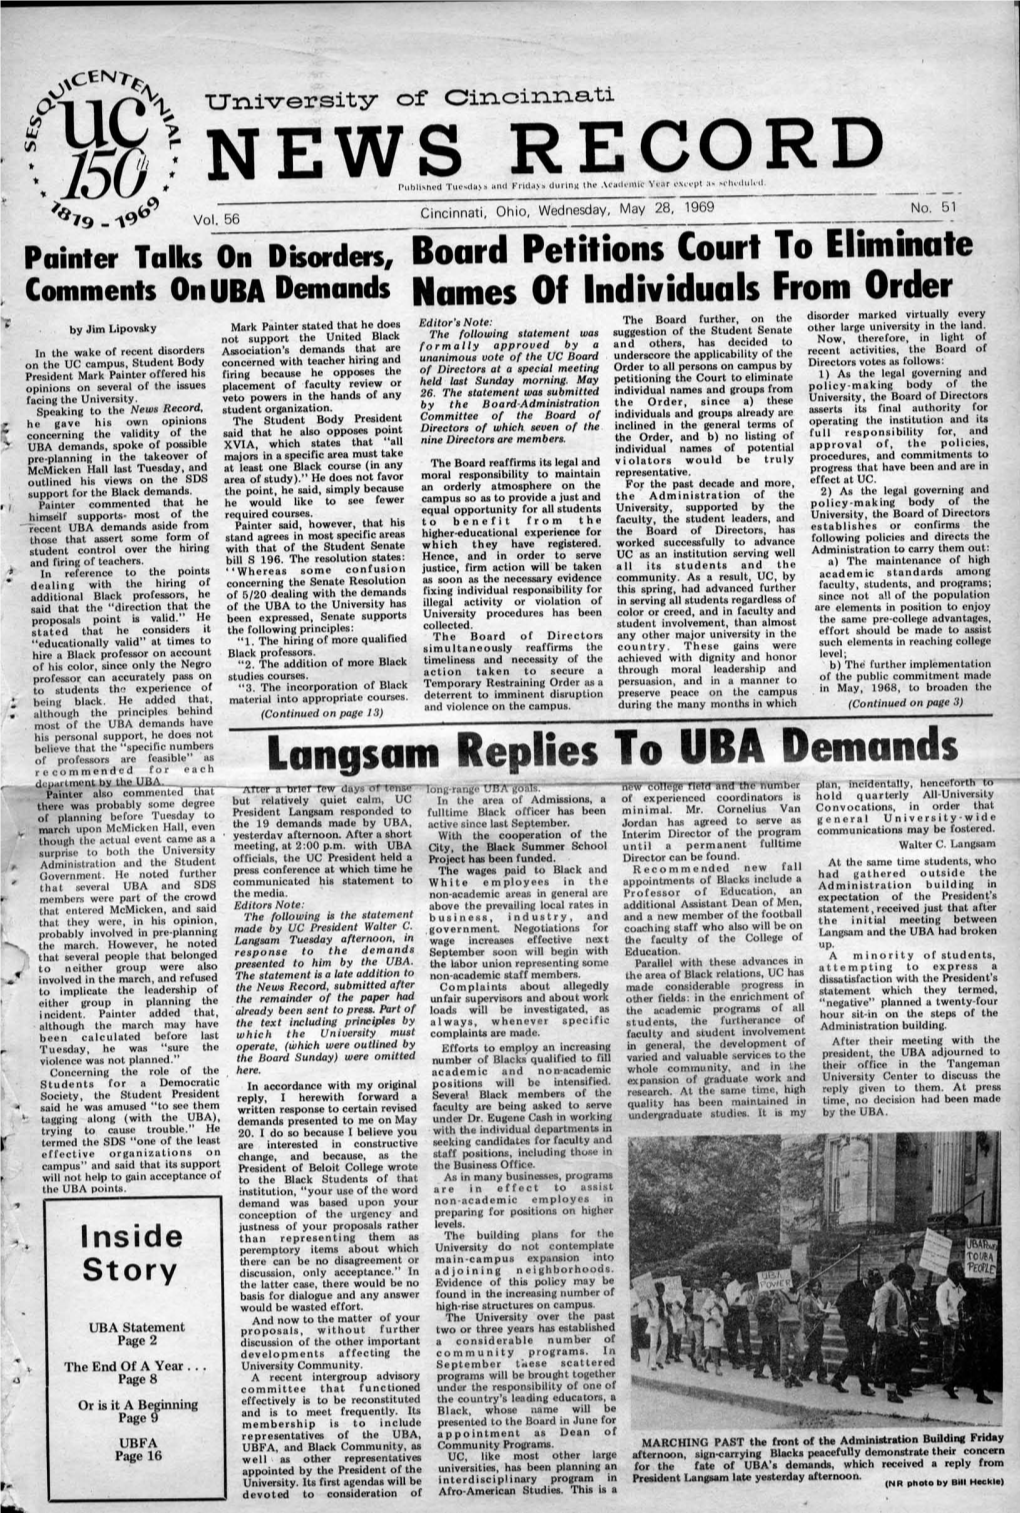 University of Cincinnati News Record. Wednesday, May 28, 1969. Vol. LVI